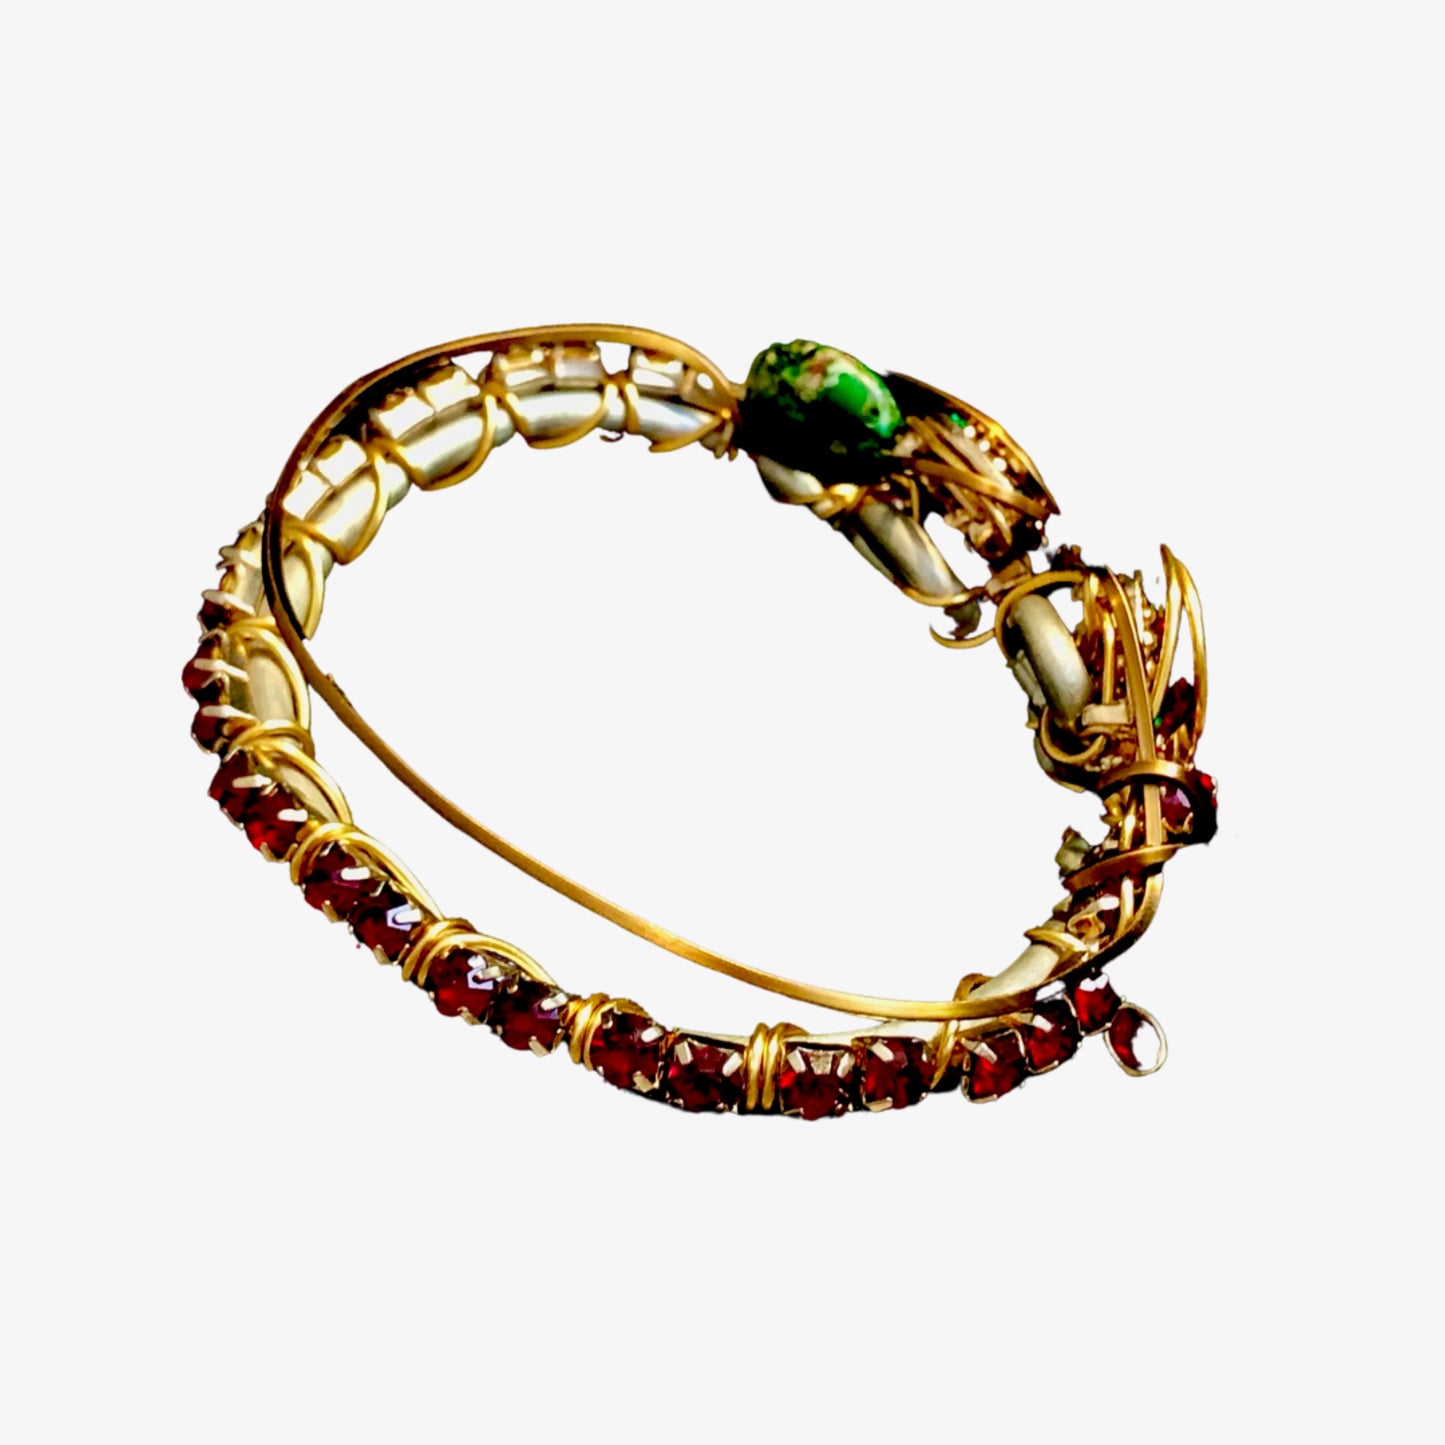 Mistletoe bracelet